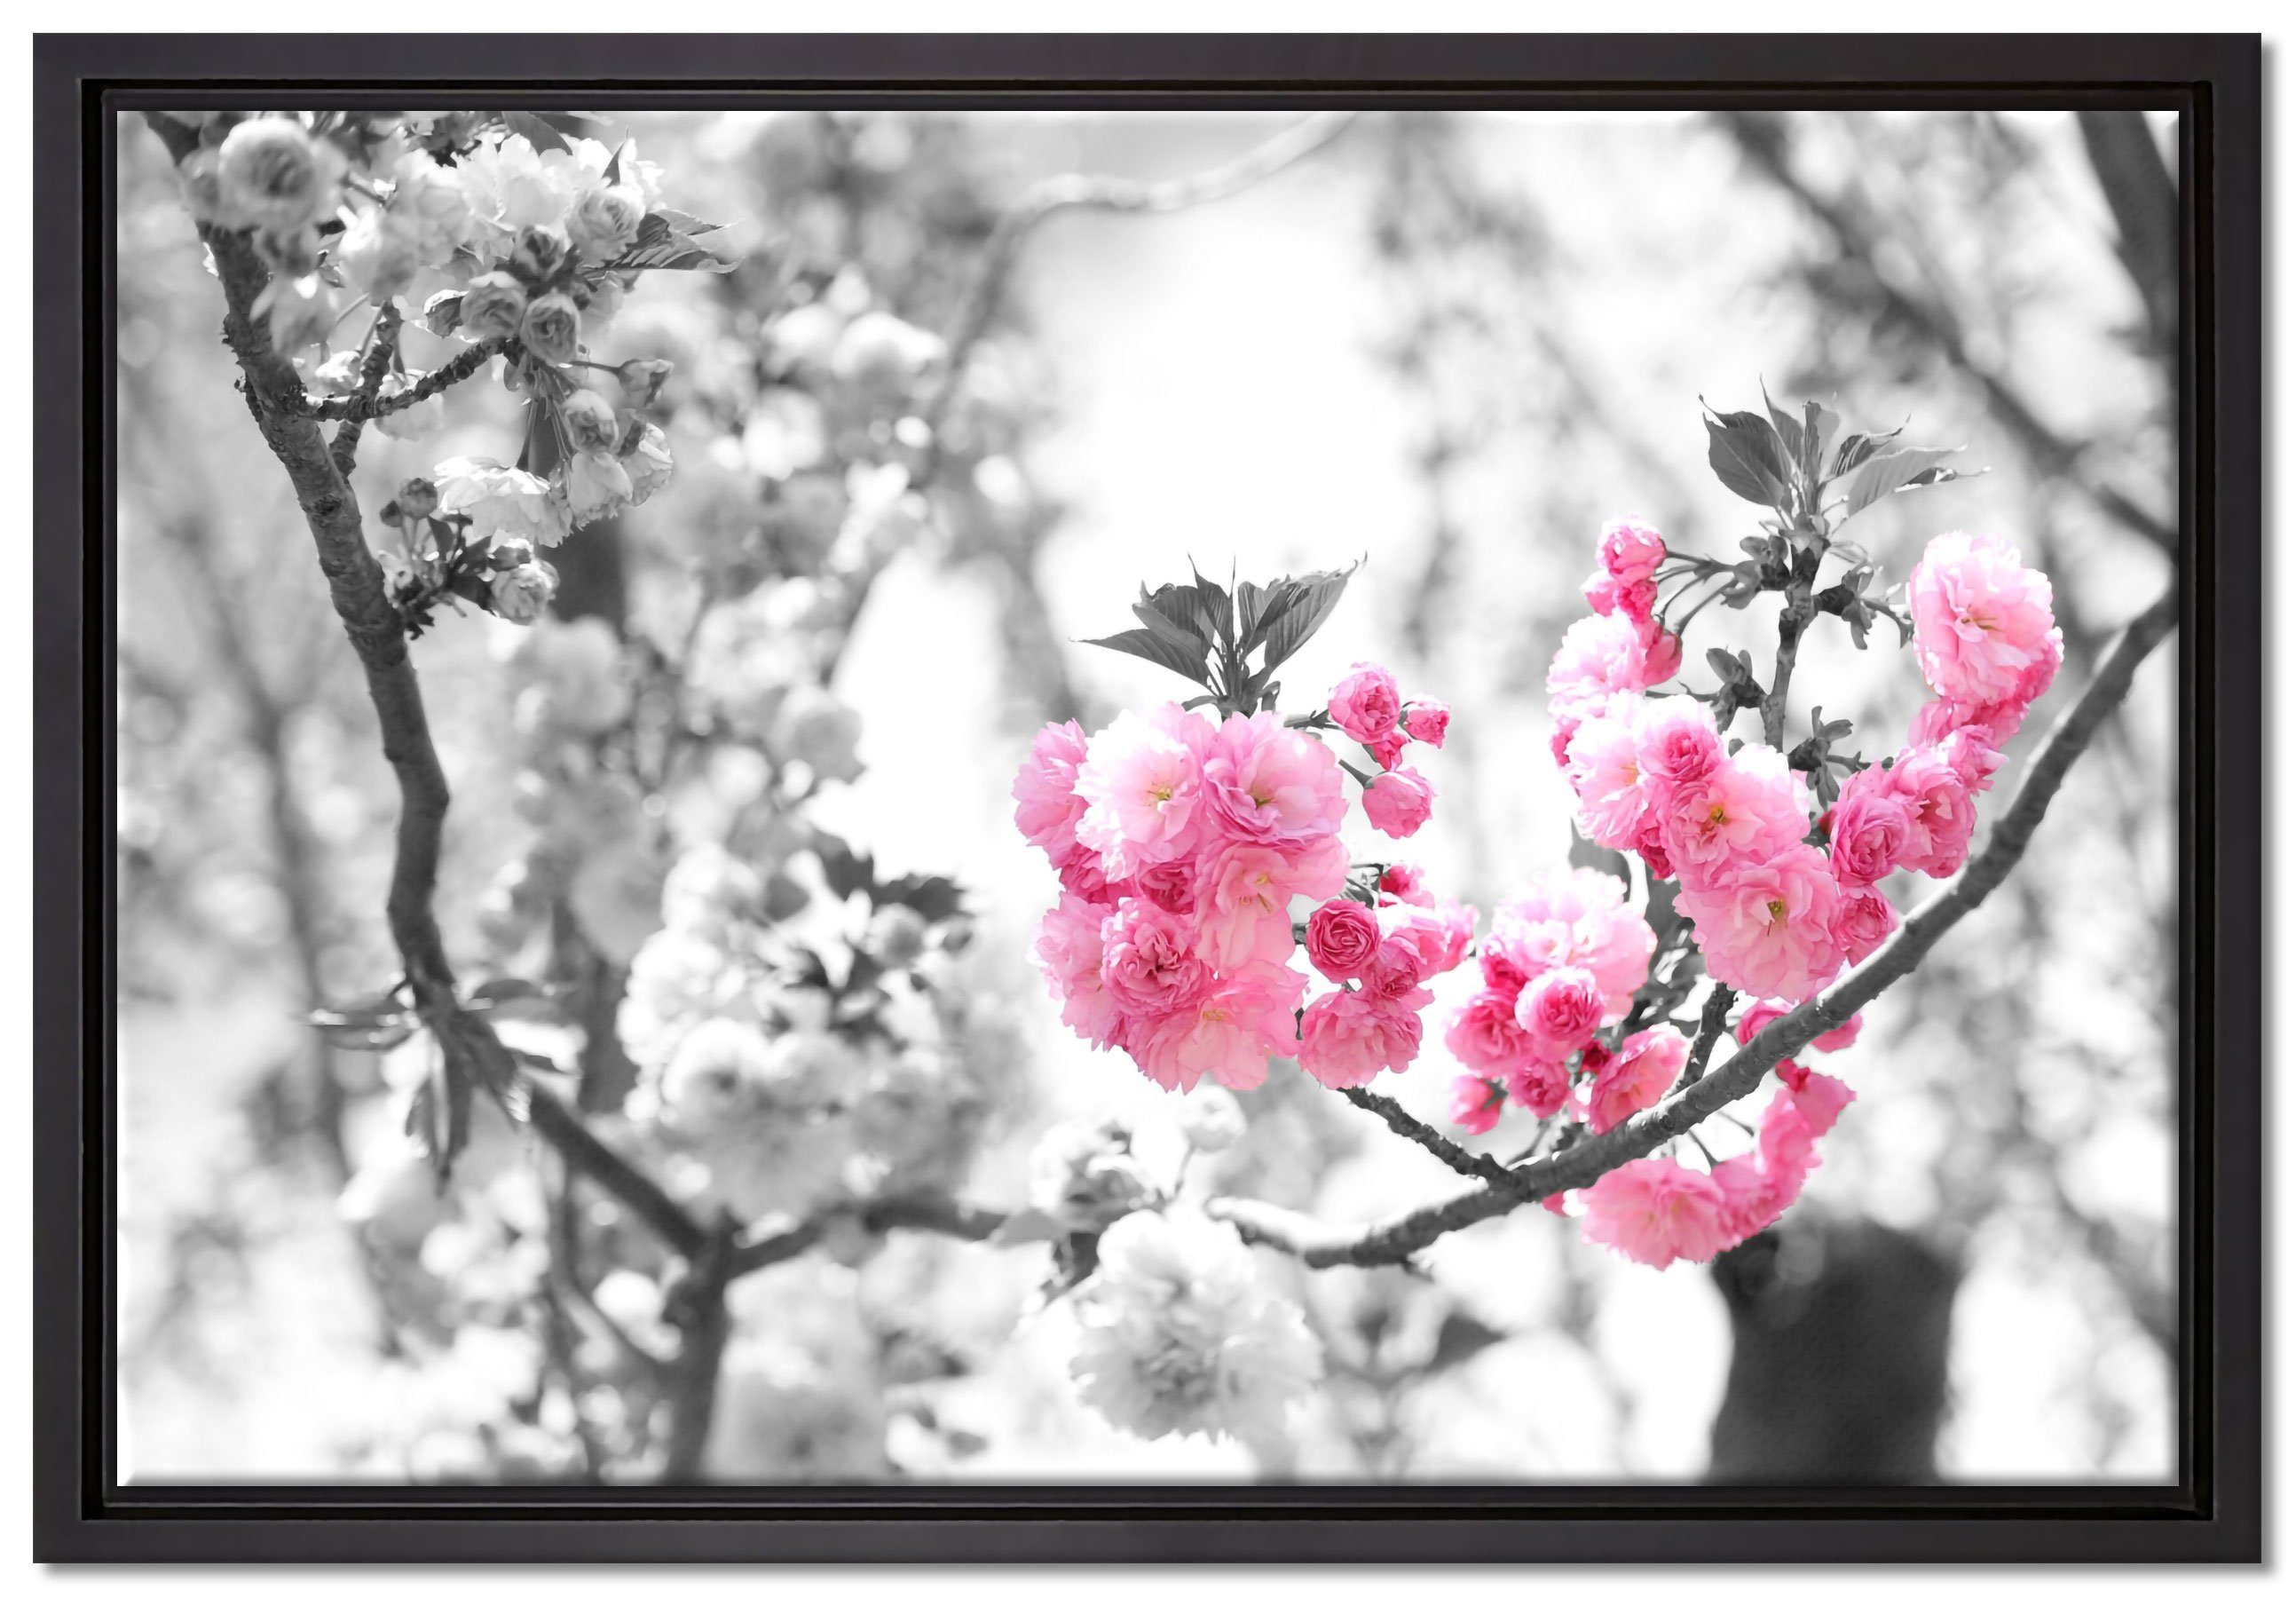 Leinwandbild Pixxprint fertig bespannt, inkl. sehr einem St), in Wanddekoration gefasst, Kirschblüten, Schattenfugen-Bilderrahmen Leinwandbild Zackenaufhänger schöne (1